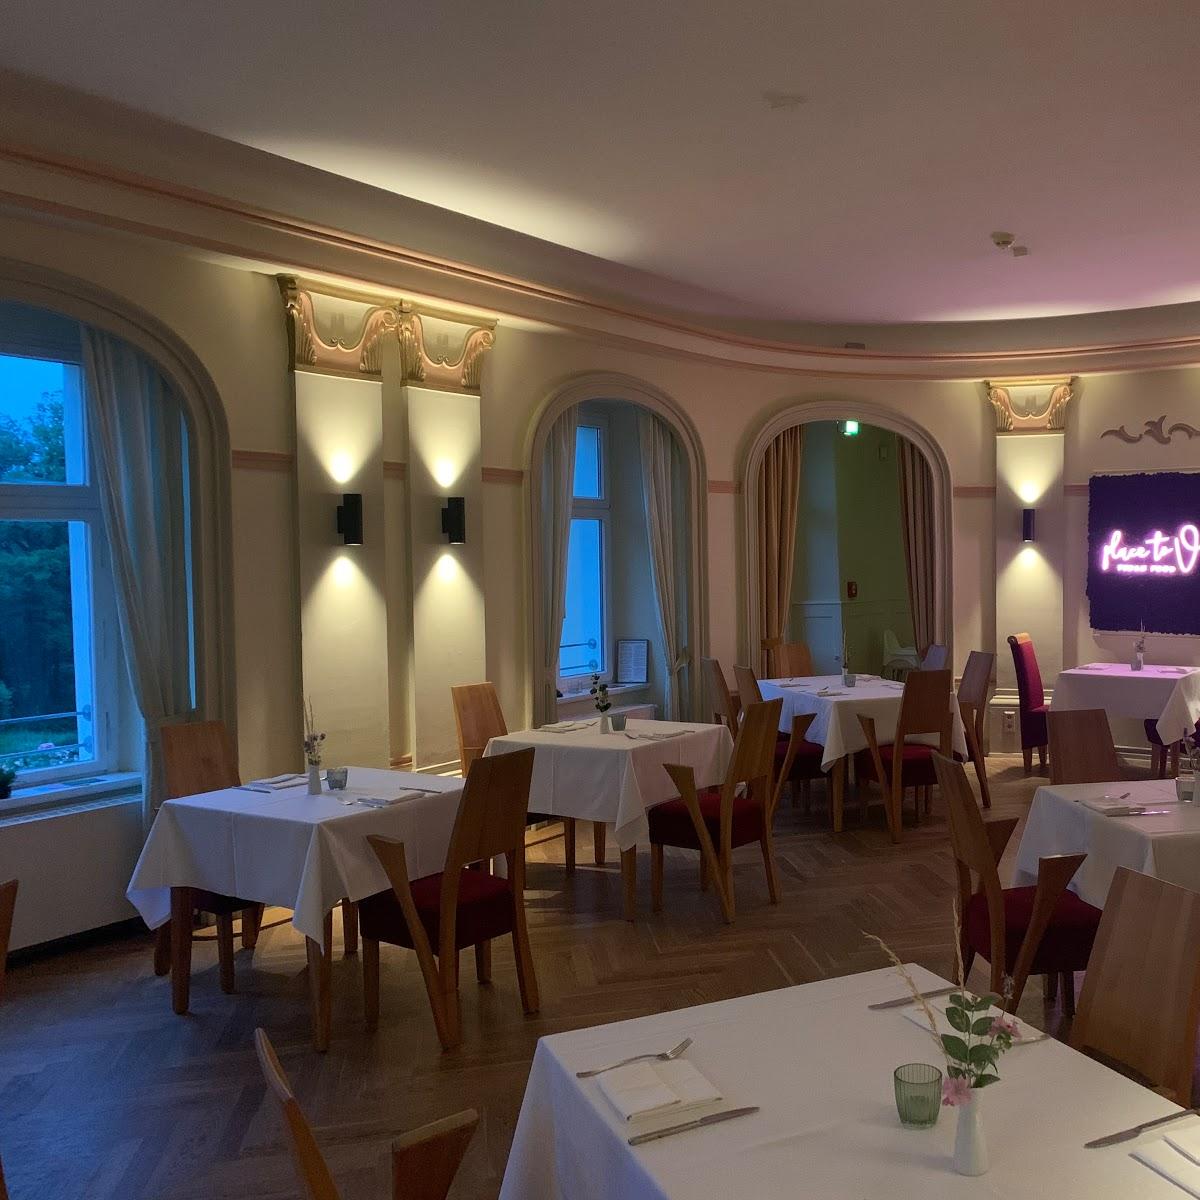 Restaurant "place to V" in Lenzen (Elbe)